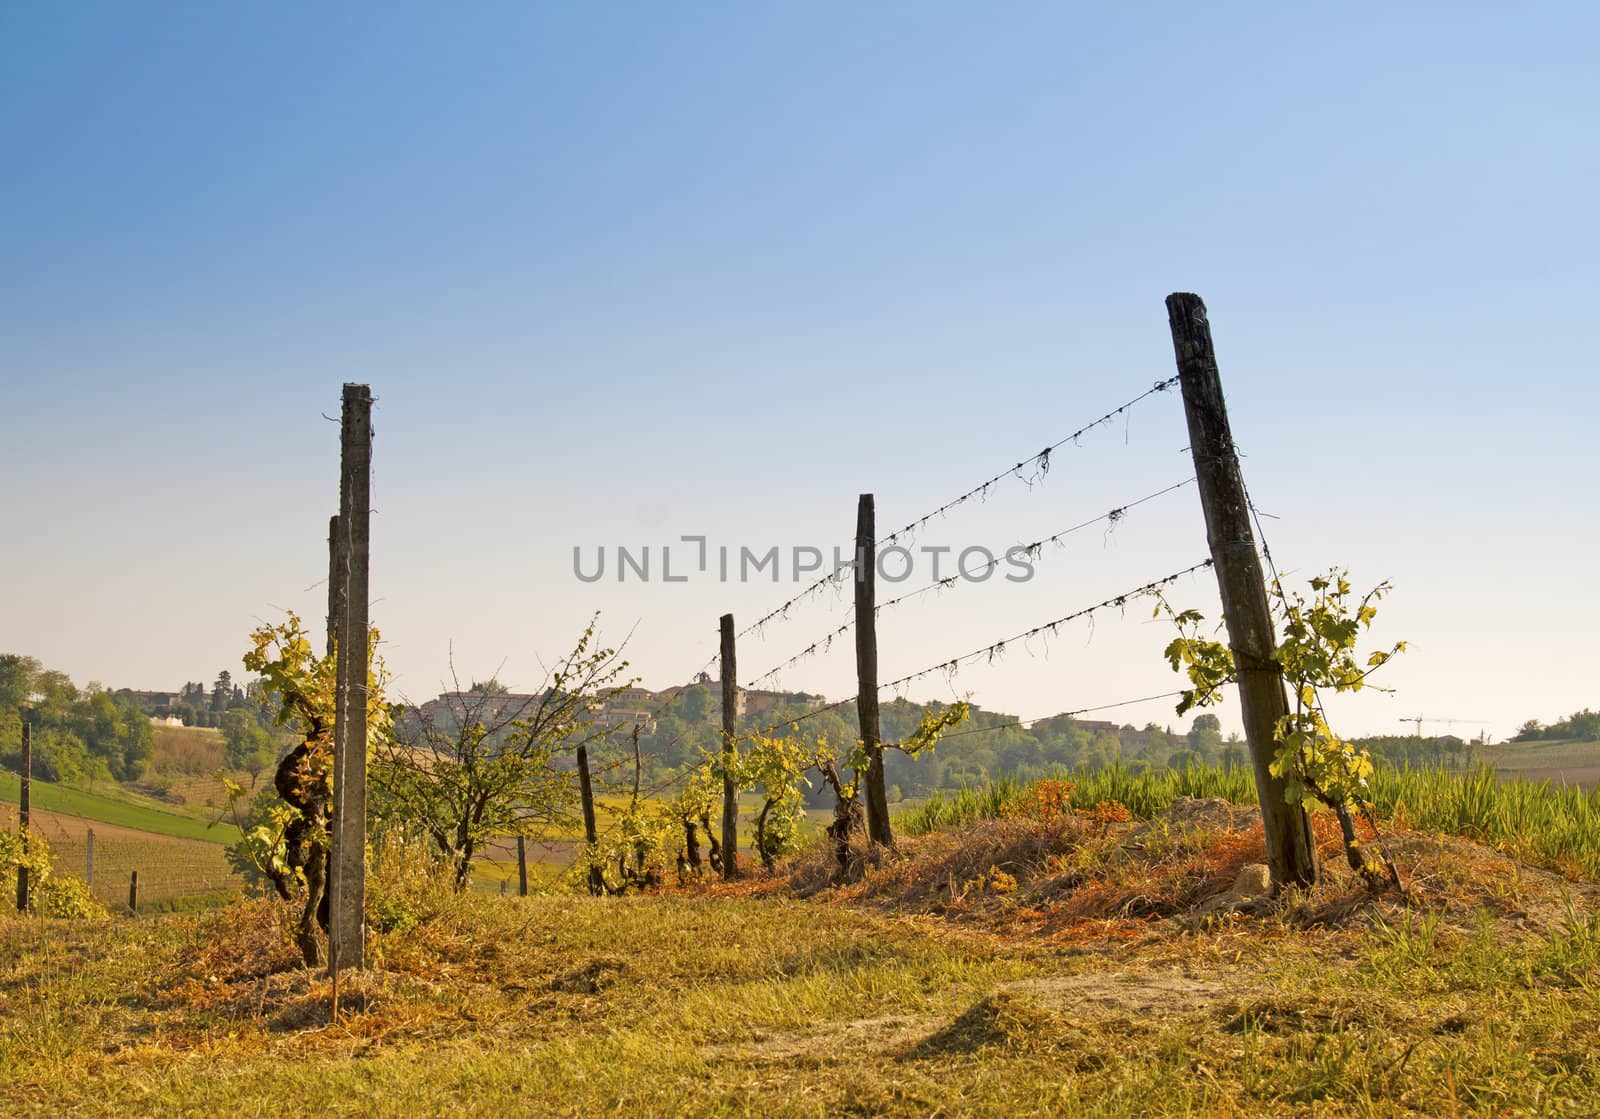 Vineyard by Koufax73